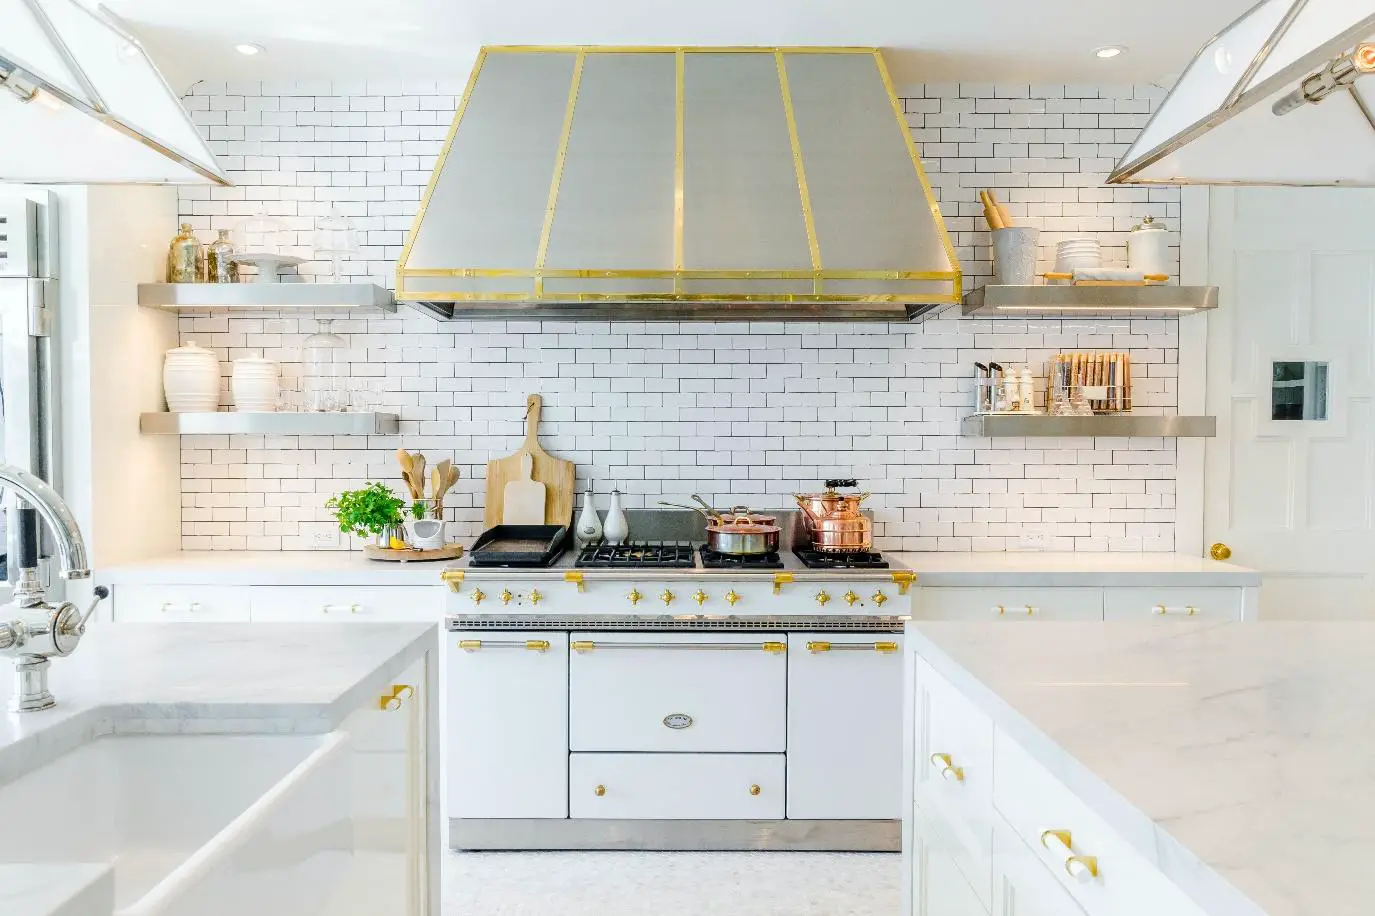 How to Remove a Kitchen Tile Backsplash